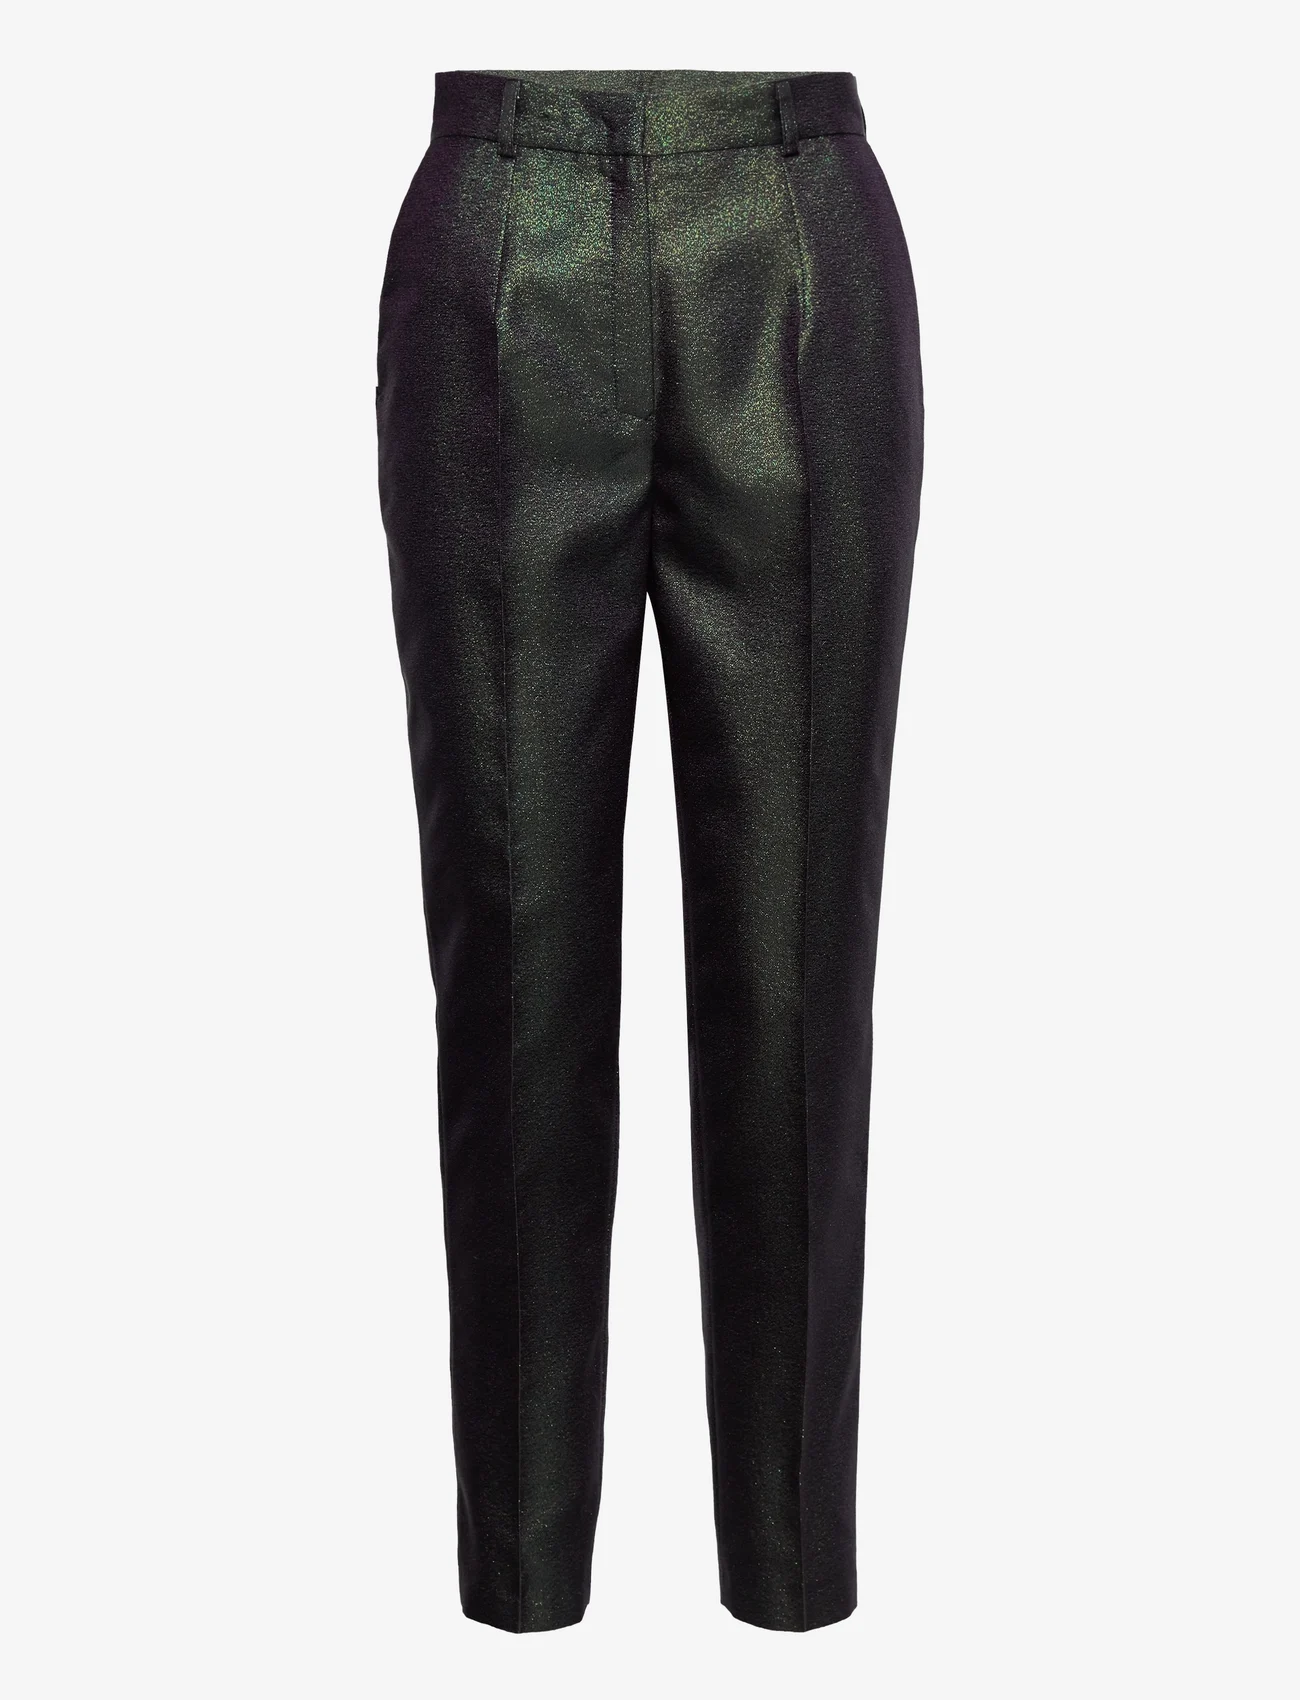 hálo - PHENOMENA pants - dressbukser - multicolor - 0